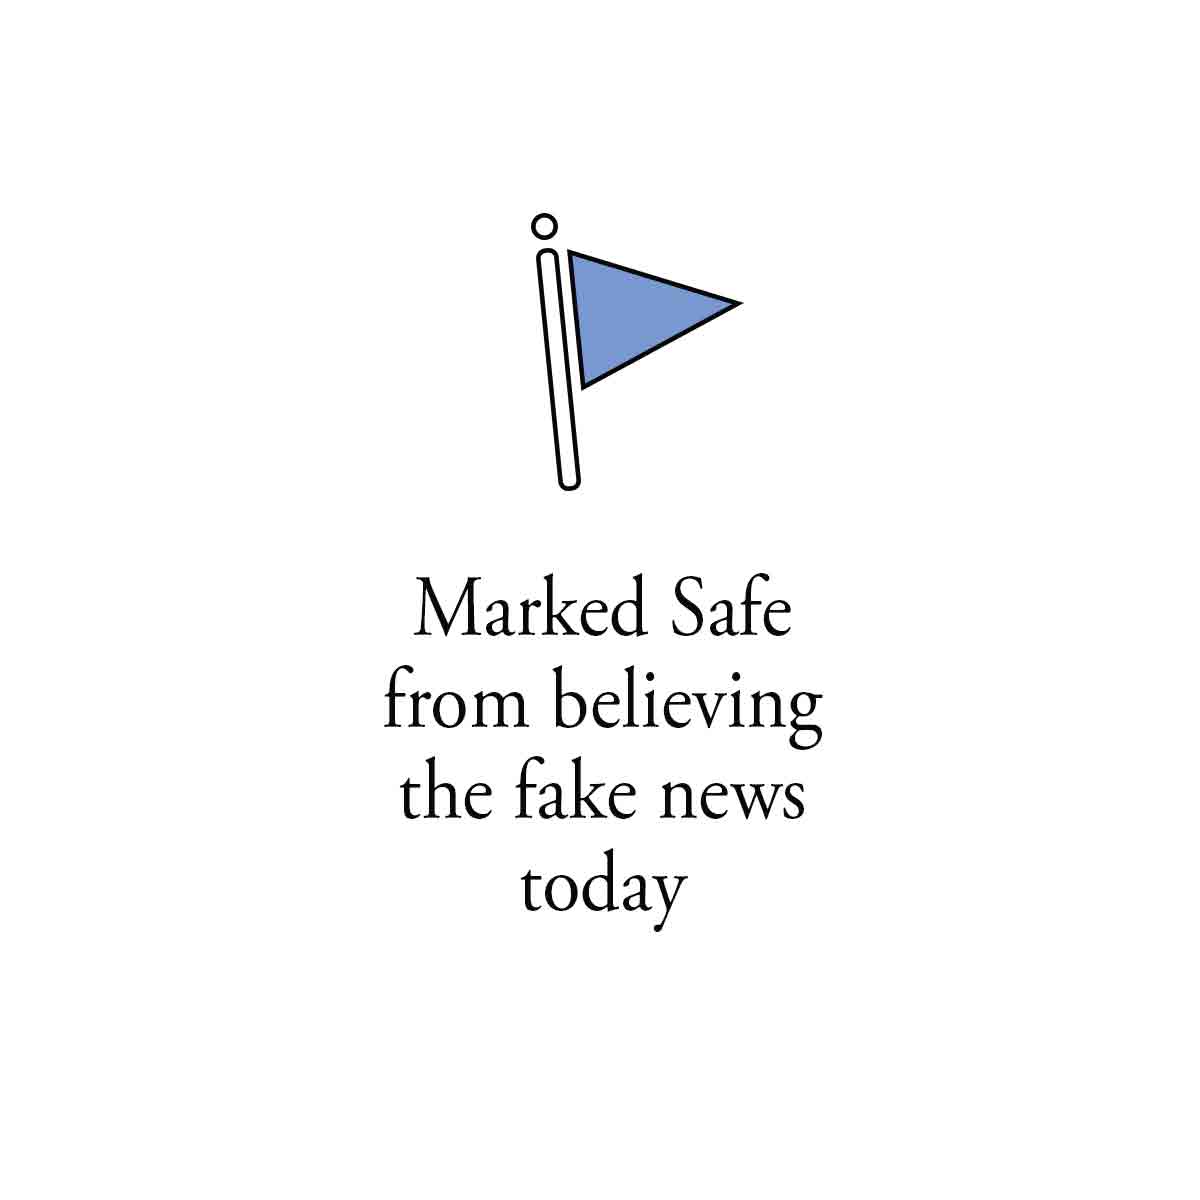 Marked safe - Fake News